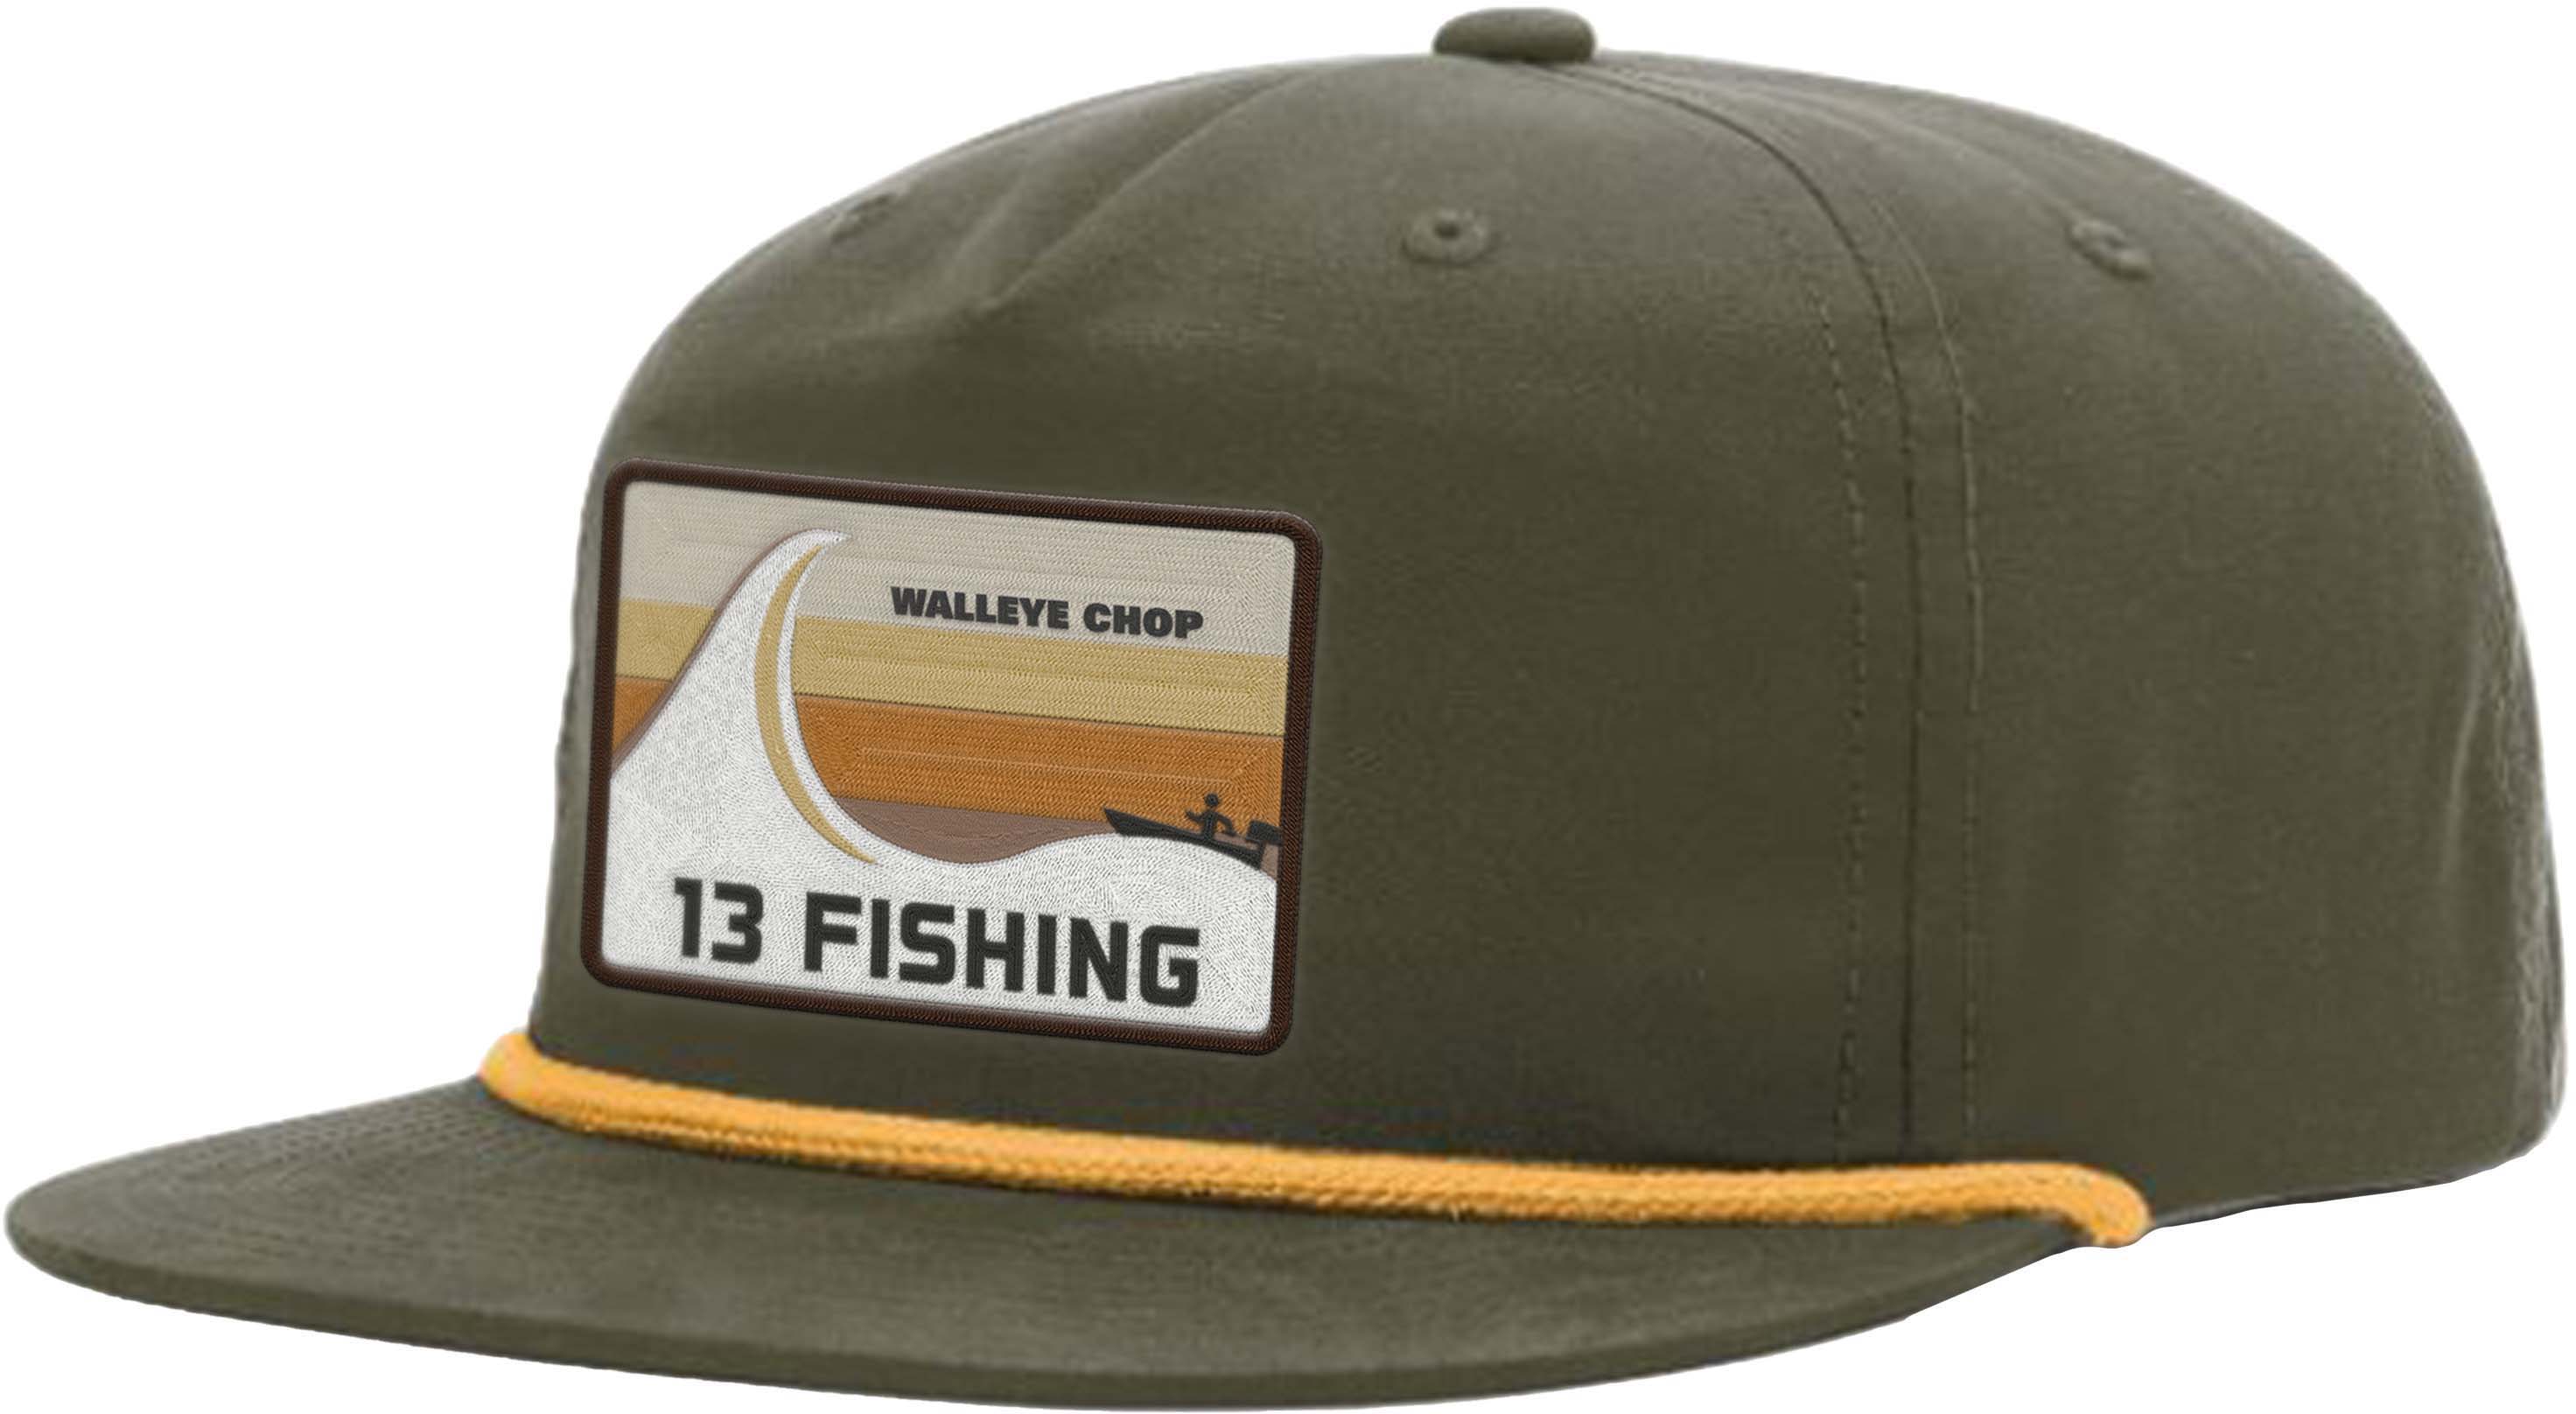 https://op2.0ps.us/original/opplanet-13-fishing-walleye-chop-flat-brim-snapback-hat-mens-green-one-size-hfb9-main